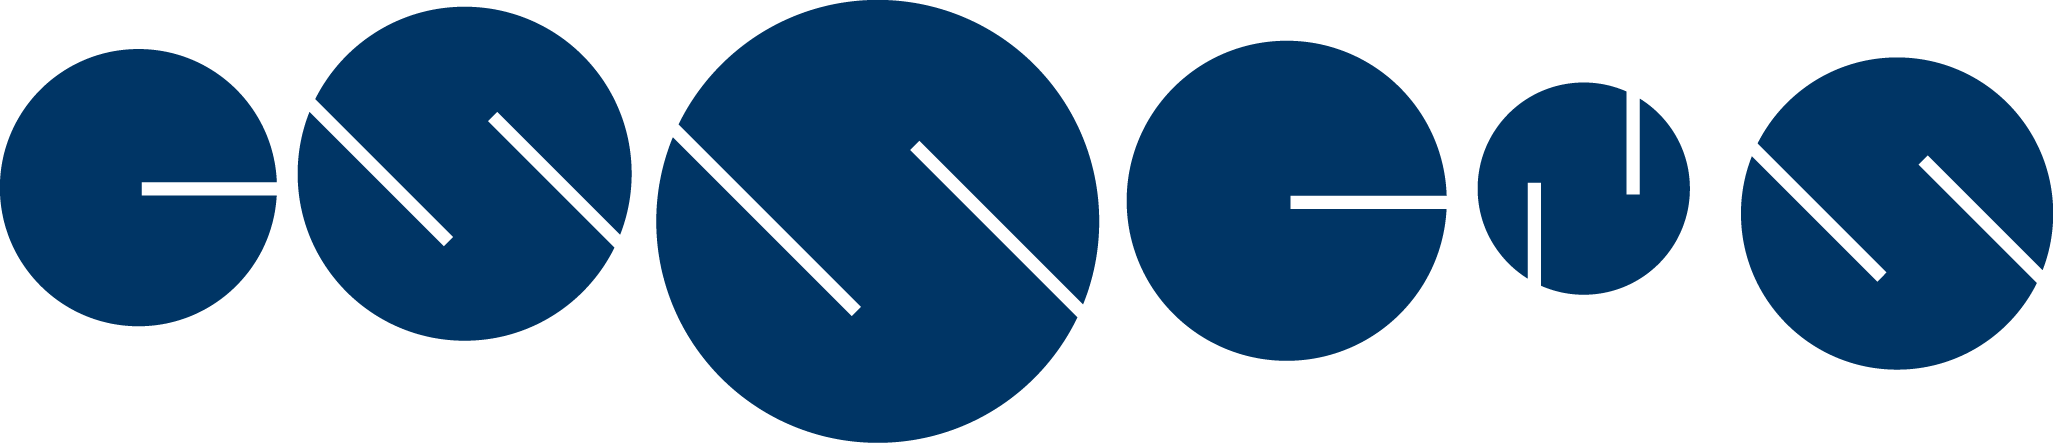 Essens Blue Logo - Essens Just Feel (2053x443)